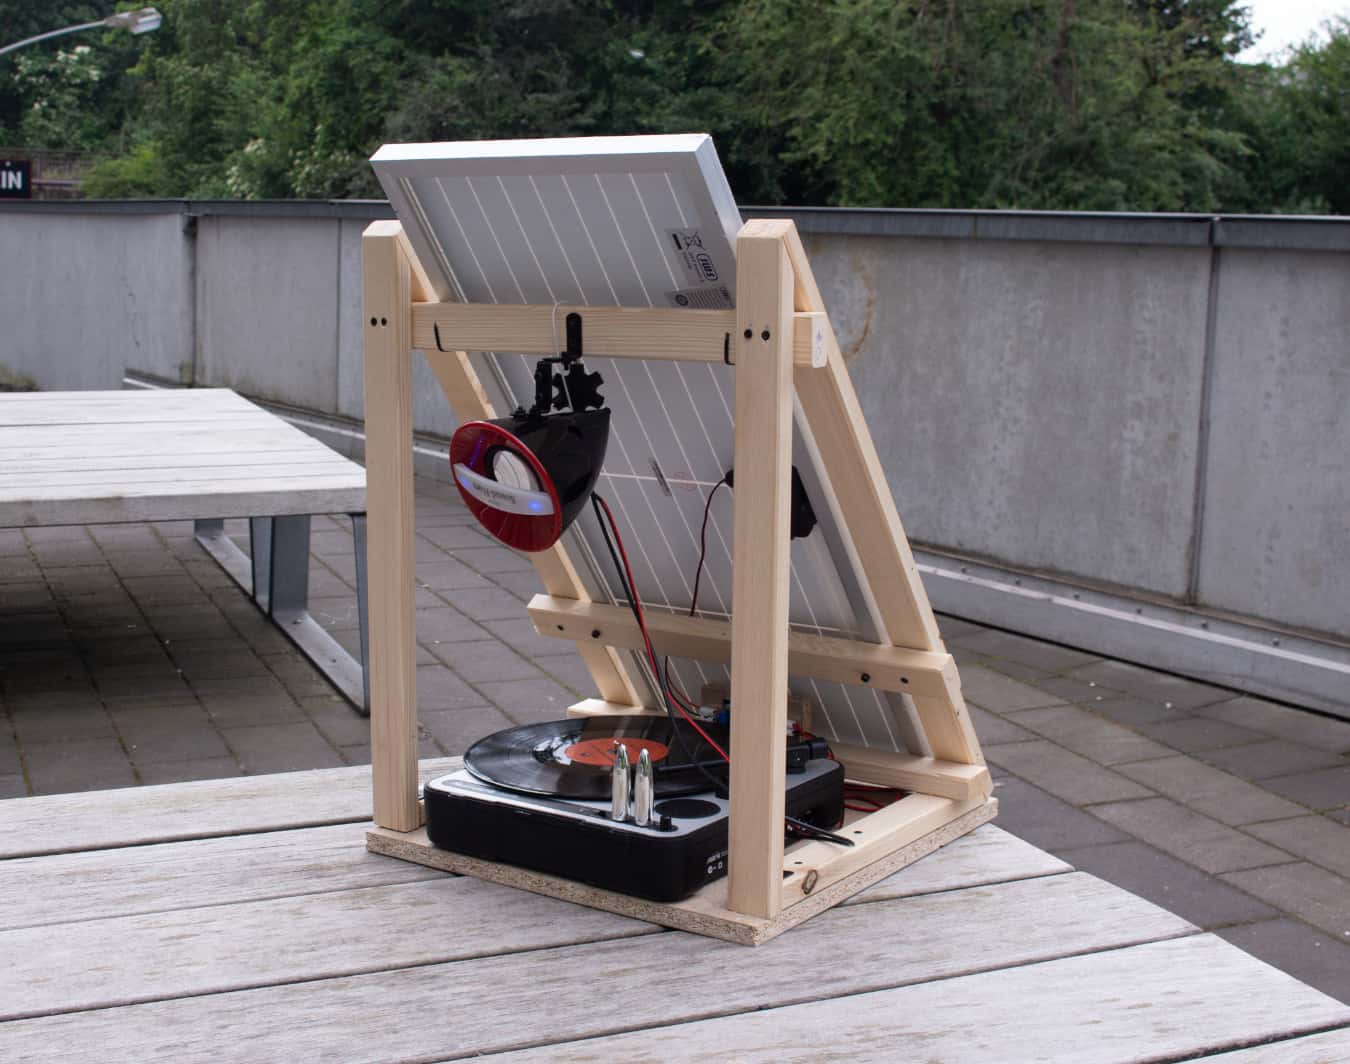 Solar-powered vinyl player during a workshop